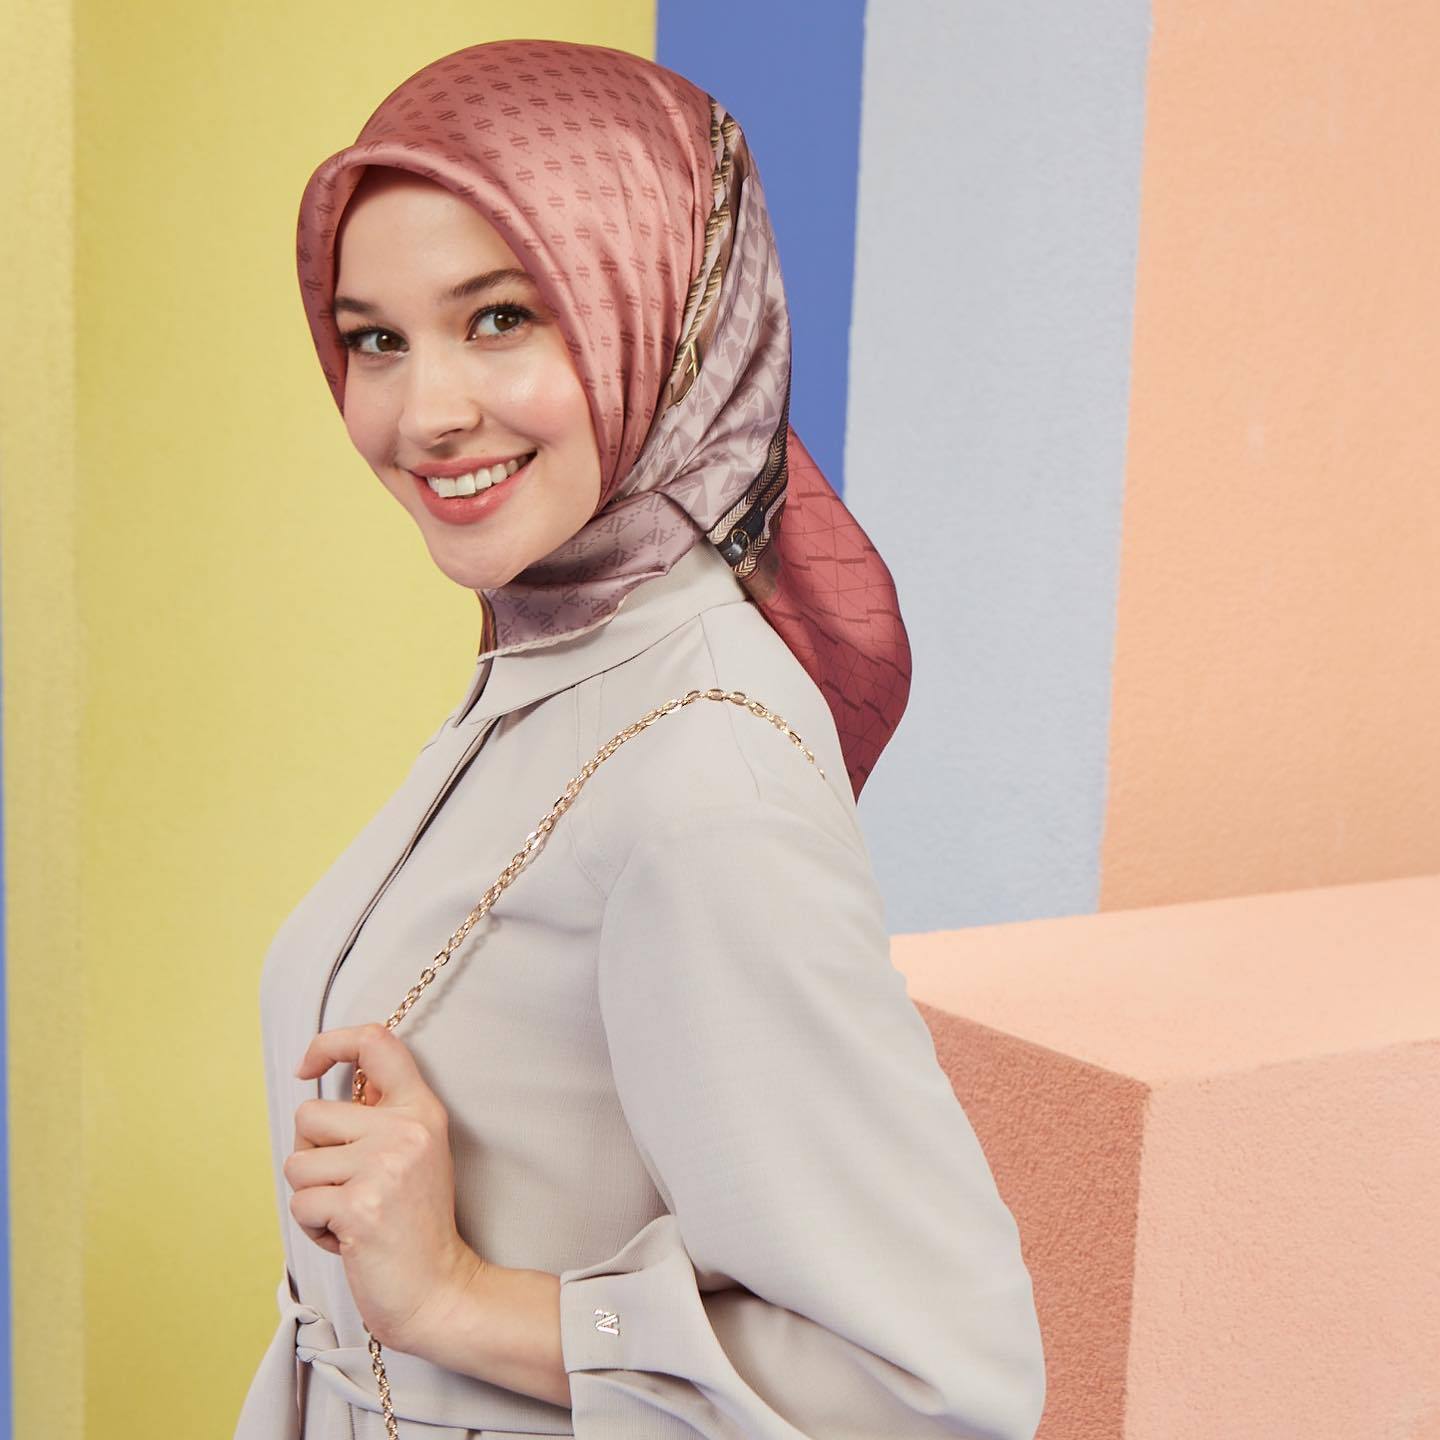 Armine Malky Stylish Silk Scarf No. 1 - Beautiful Hijab Styles